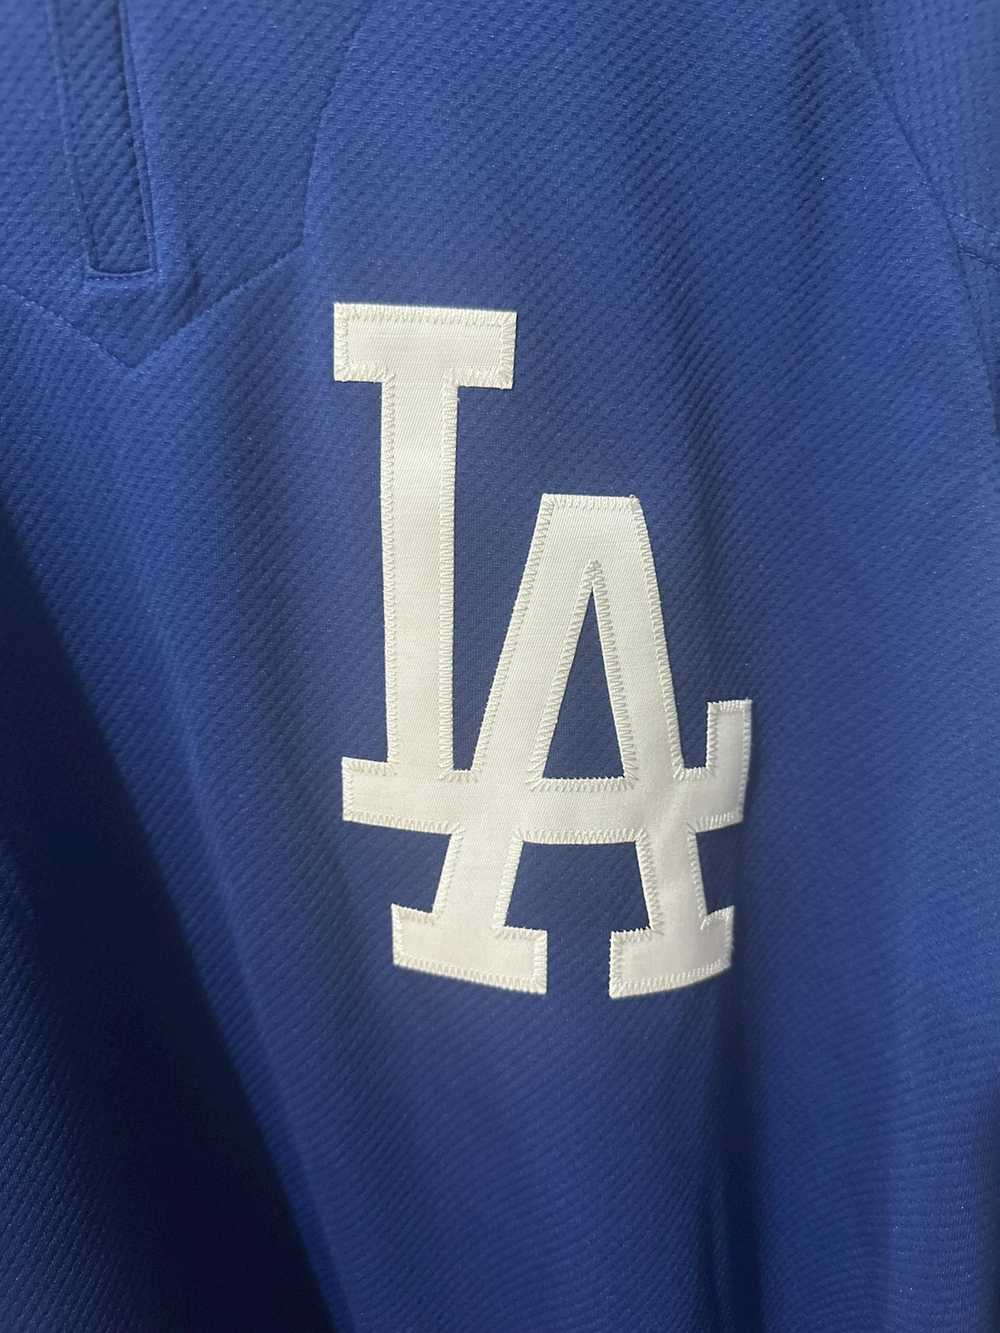 MLB LA Dodgers jersey - image 1